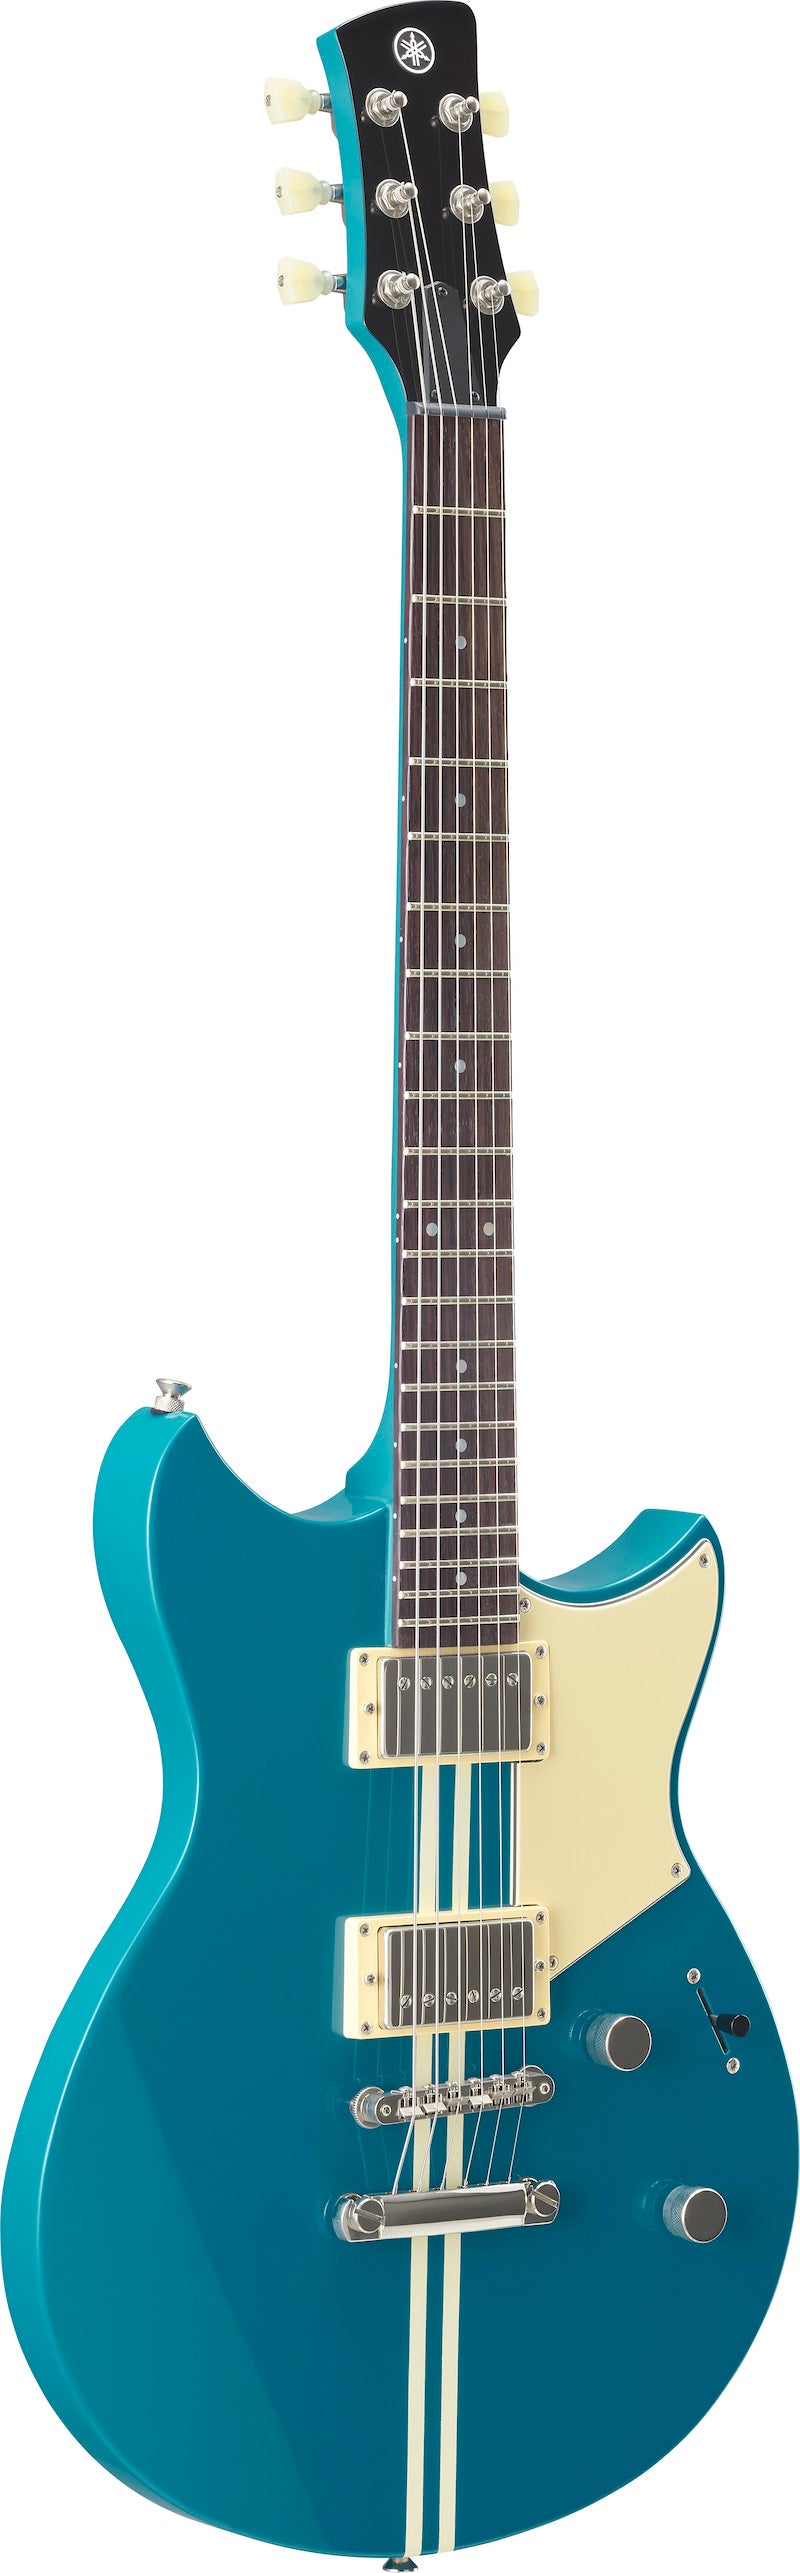 Yamaha Revstar RSE20 SWB Electric Guitar - Swift Blue